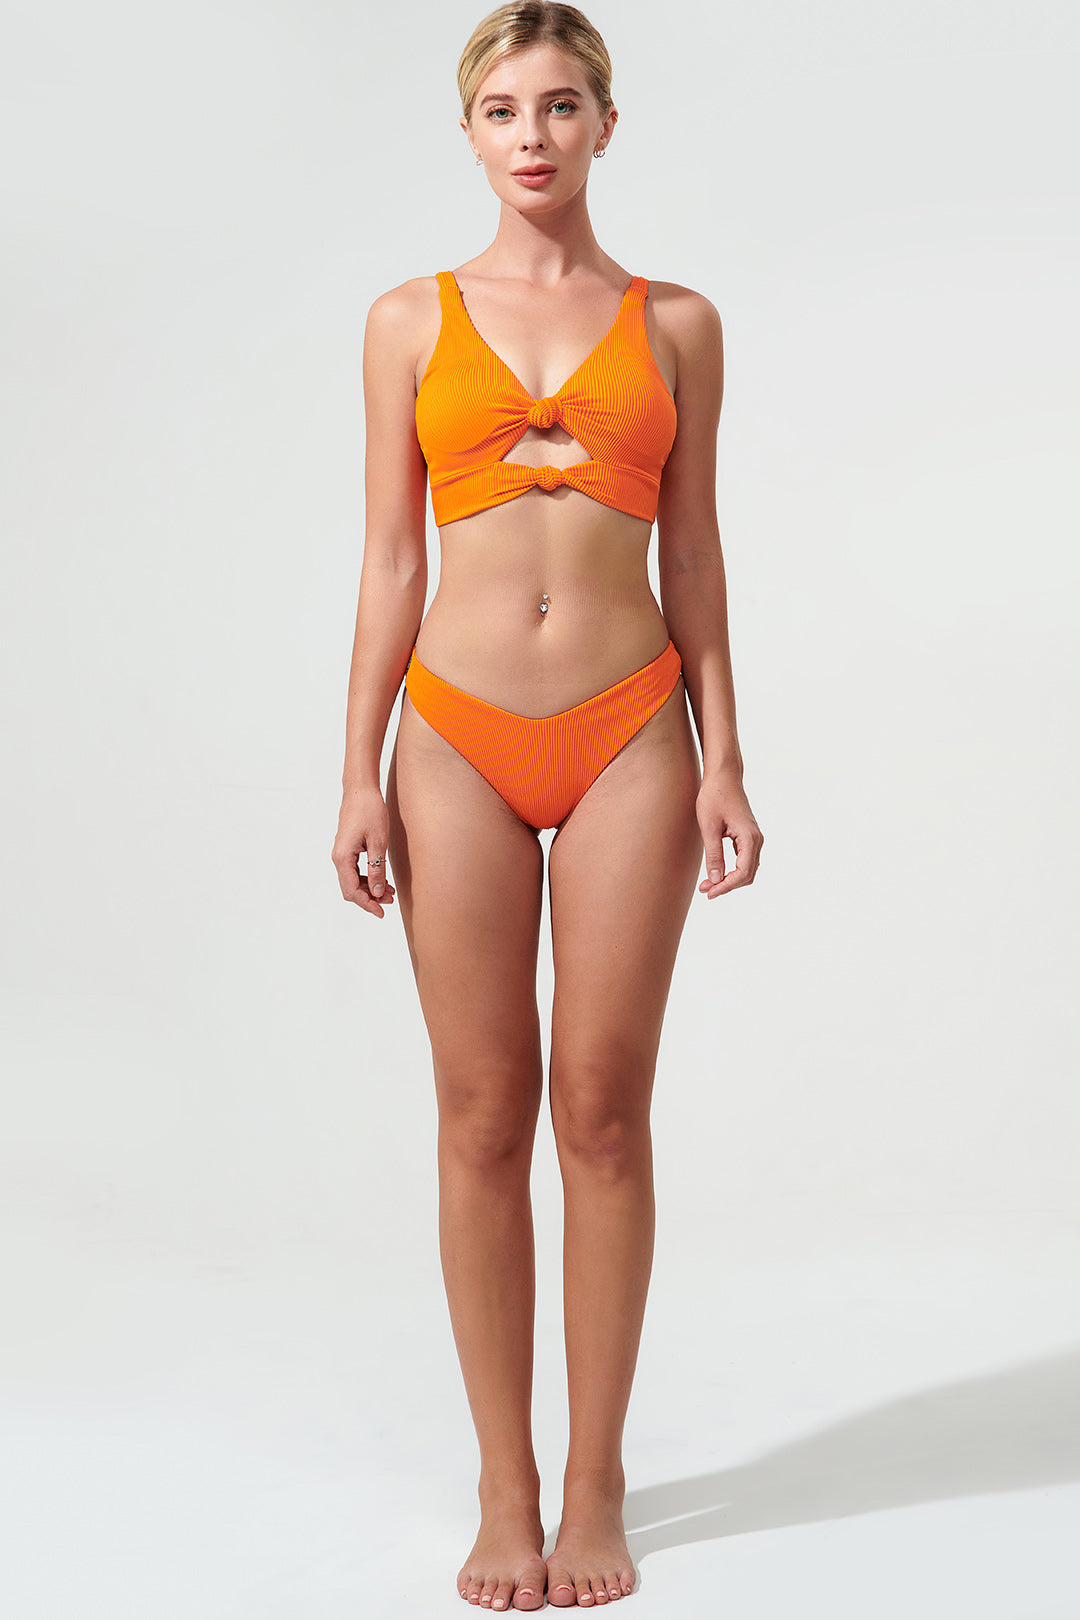 Fleuri Aris Bottom Women's Bikini in Tangerine Orange - OW-0044-WBI-OR - Image 2.